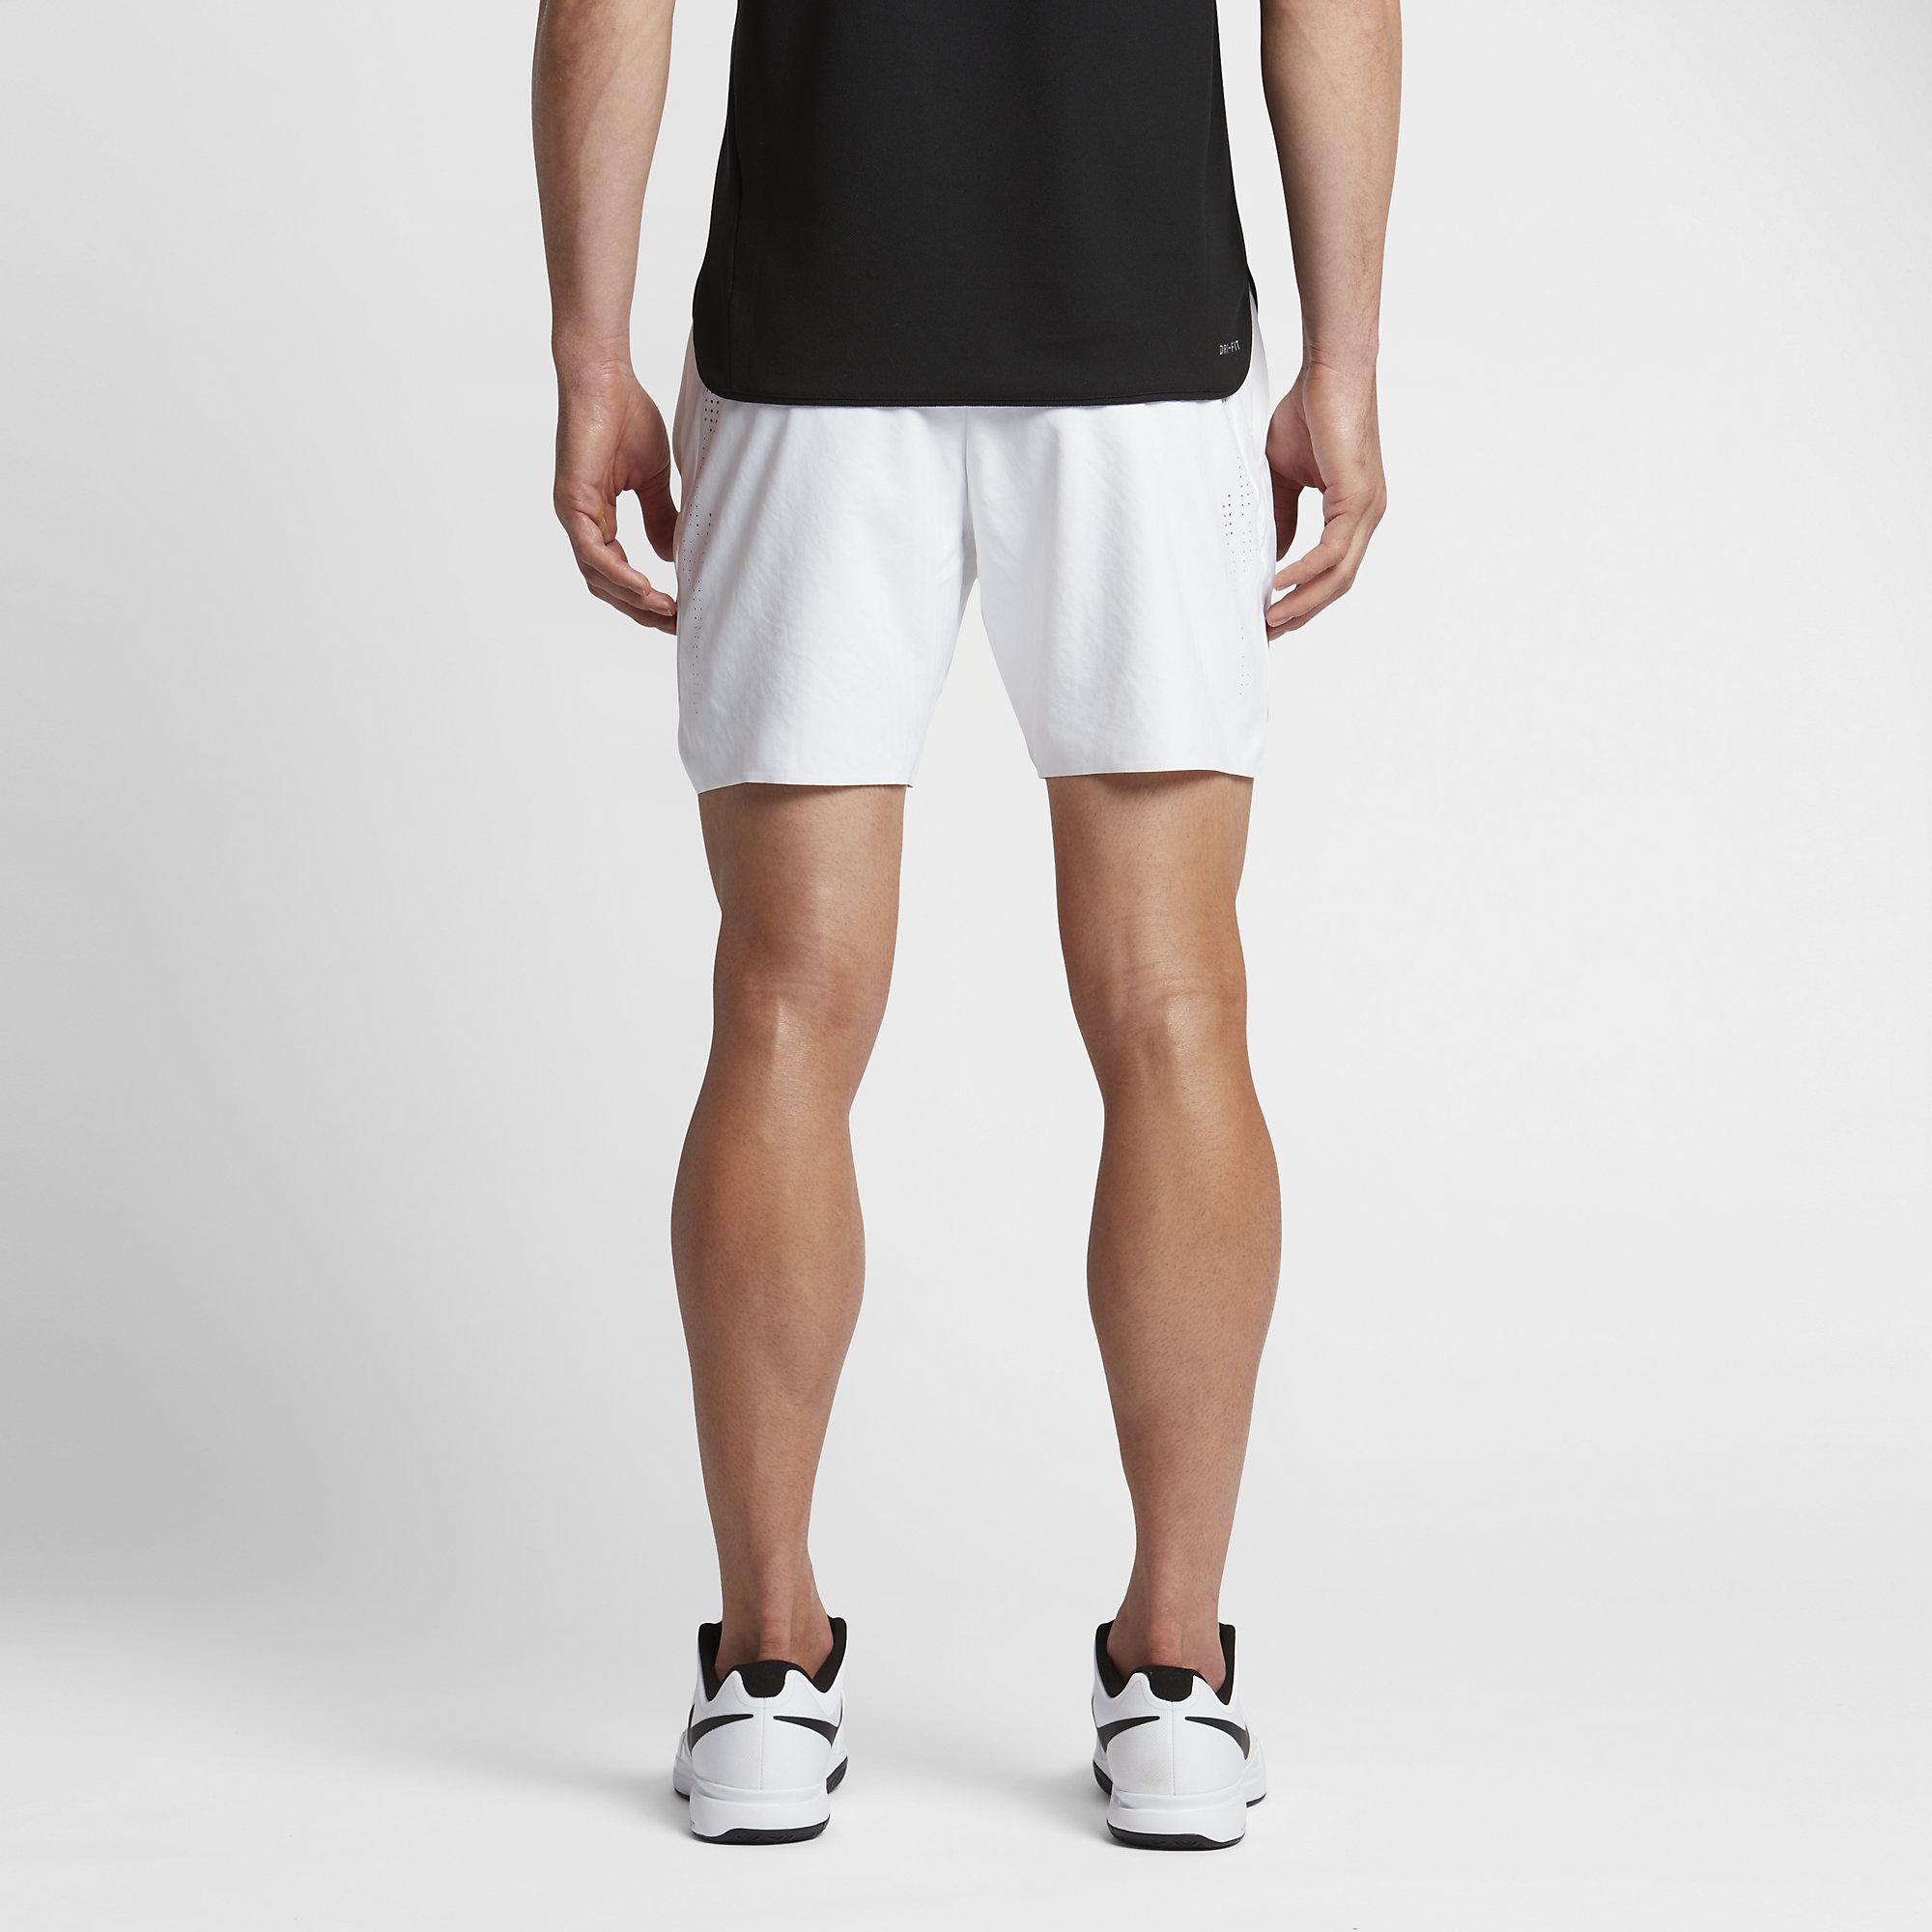 Nike Mens Flex 7 Inch Tennis Shorts - White - Tennisnuts.com